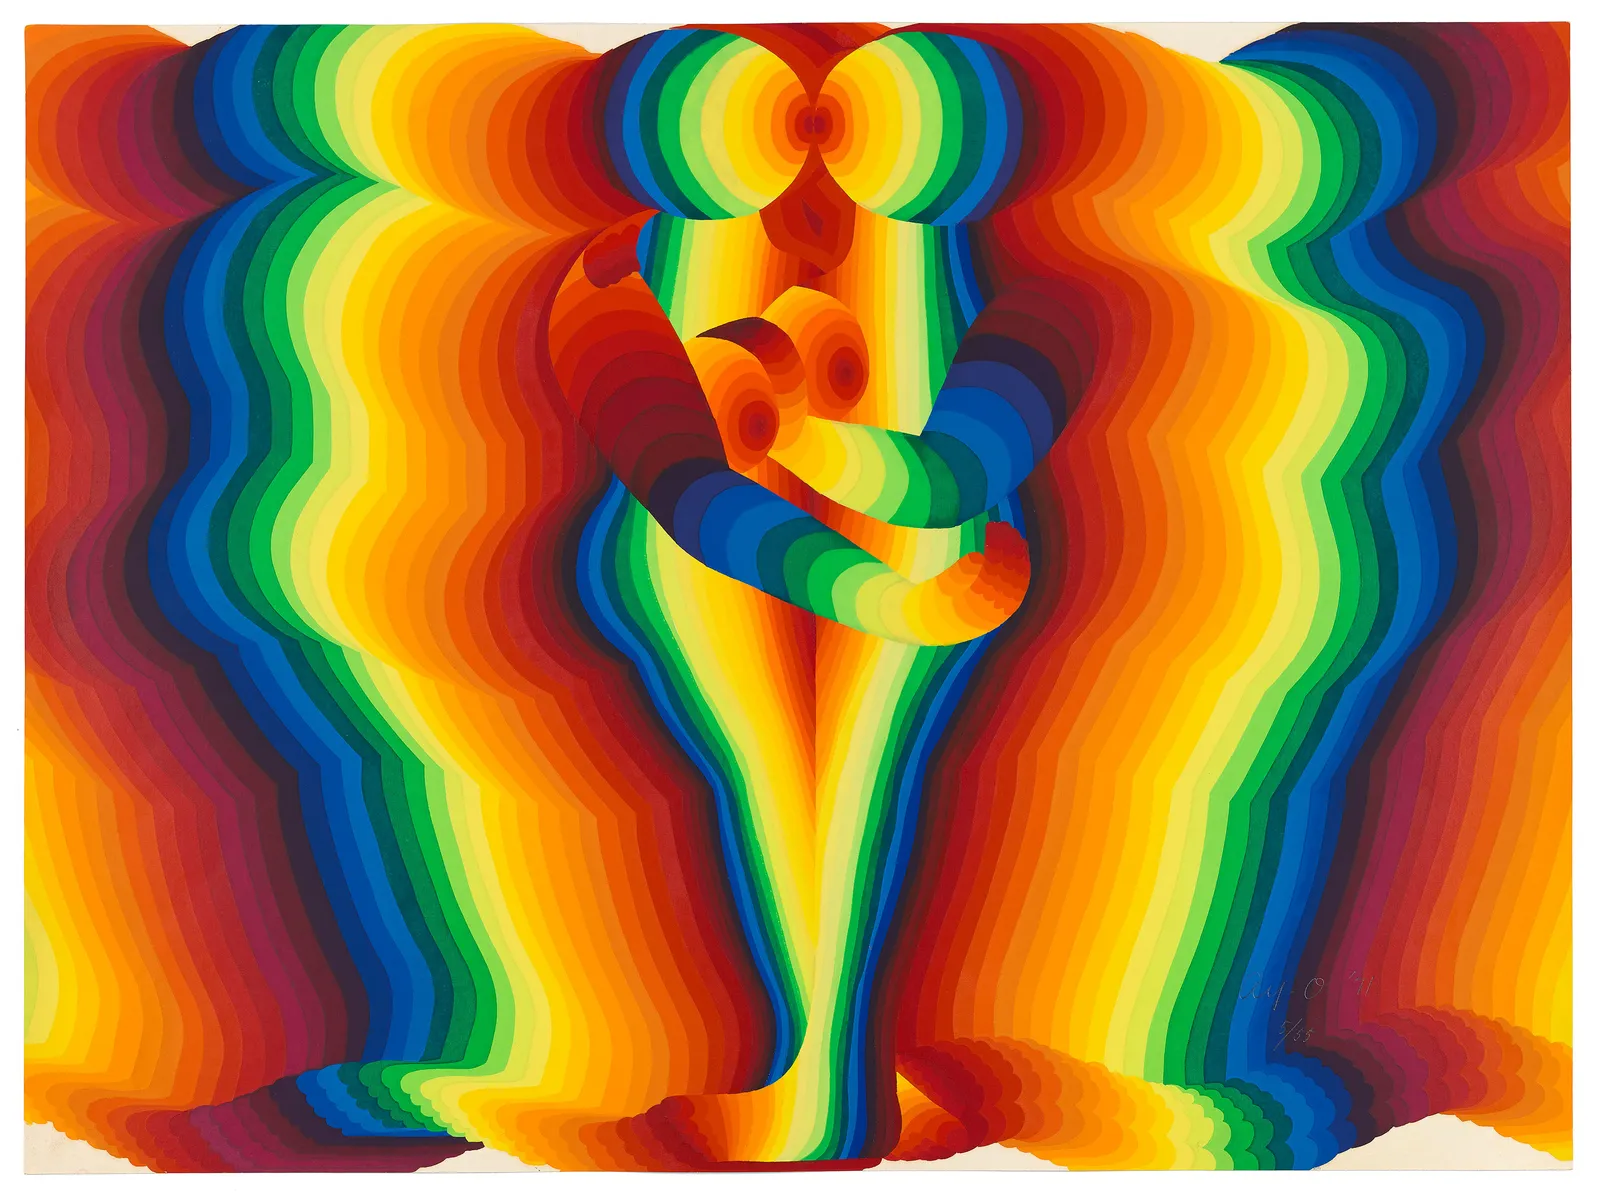 Take a Radiating, Immersive Trip Into 'Ay-O's Happy Rainbow Hell